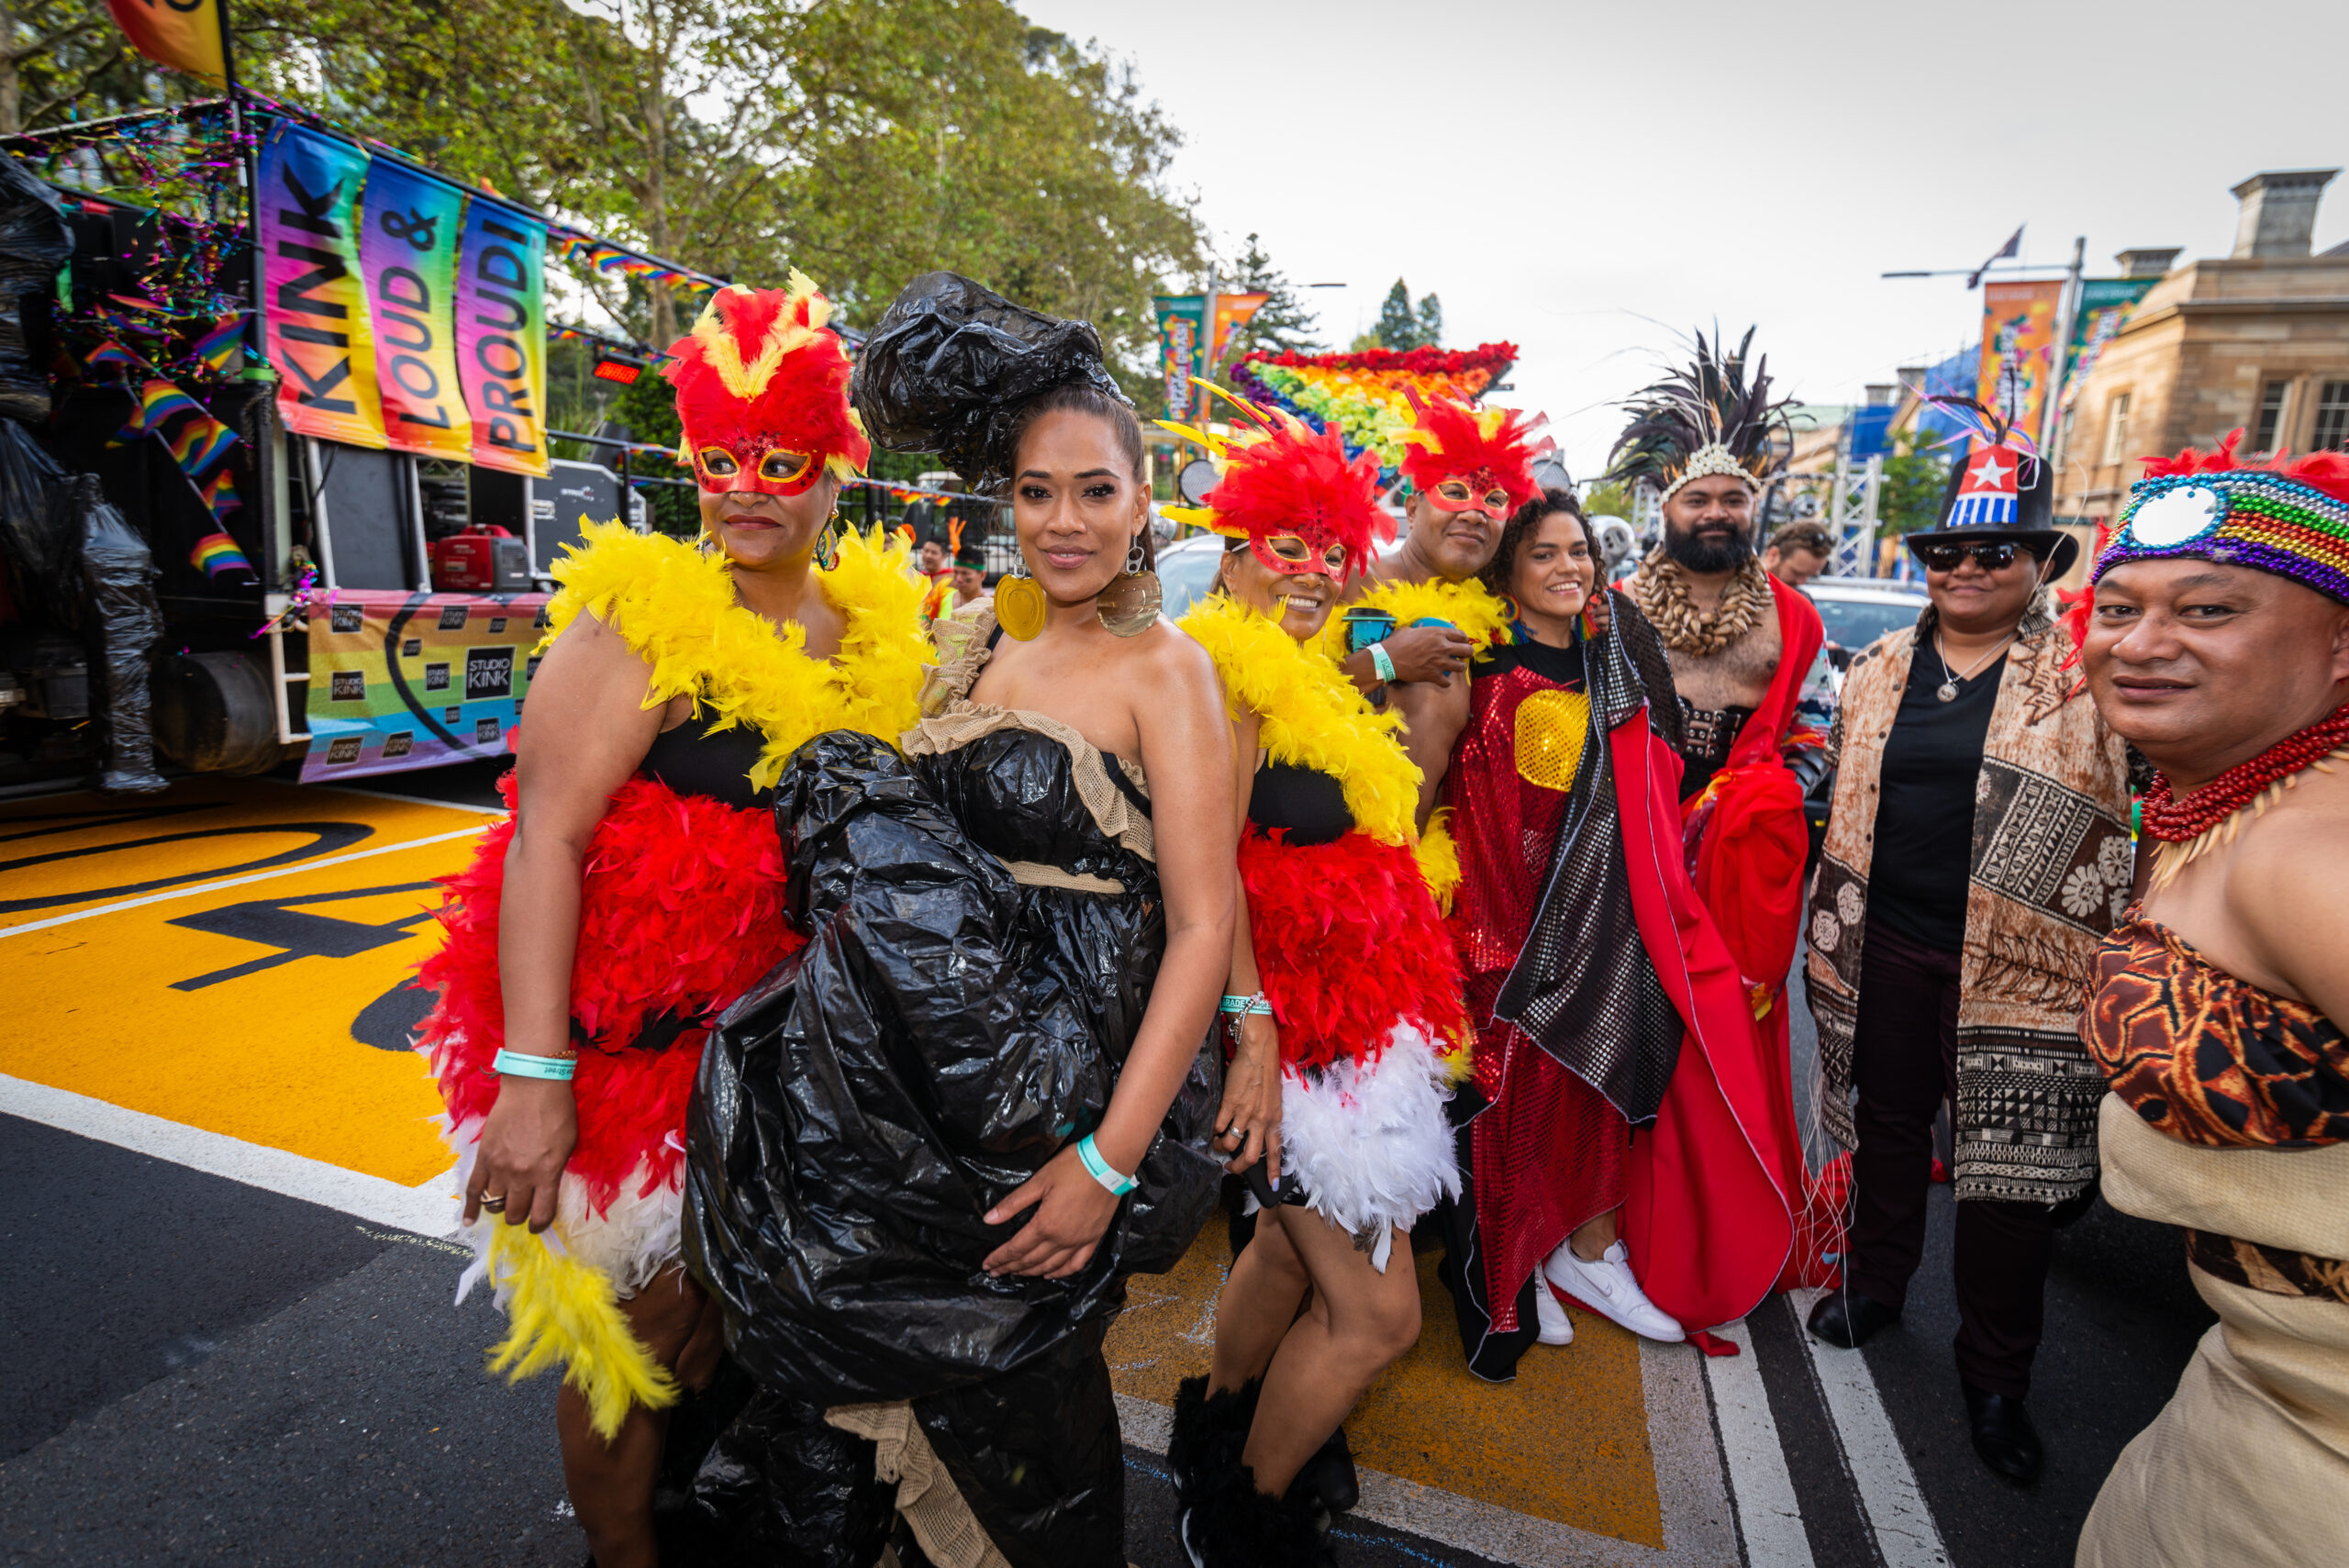 Sydney Gay & Lesbian Mardi Gras / Sydney WorldPride 2023 (Photo Credit: Chillimix)